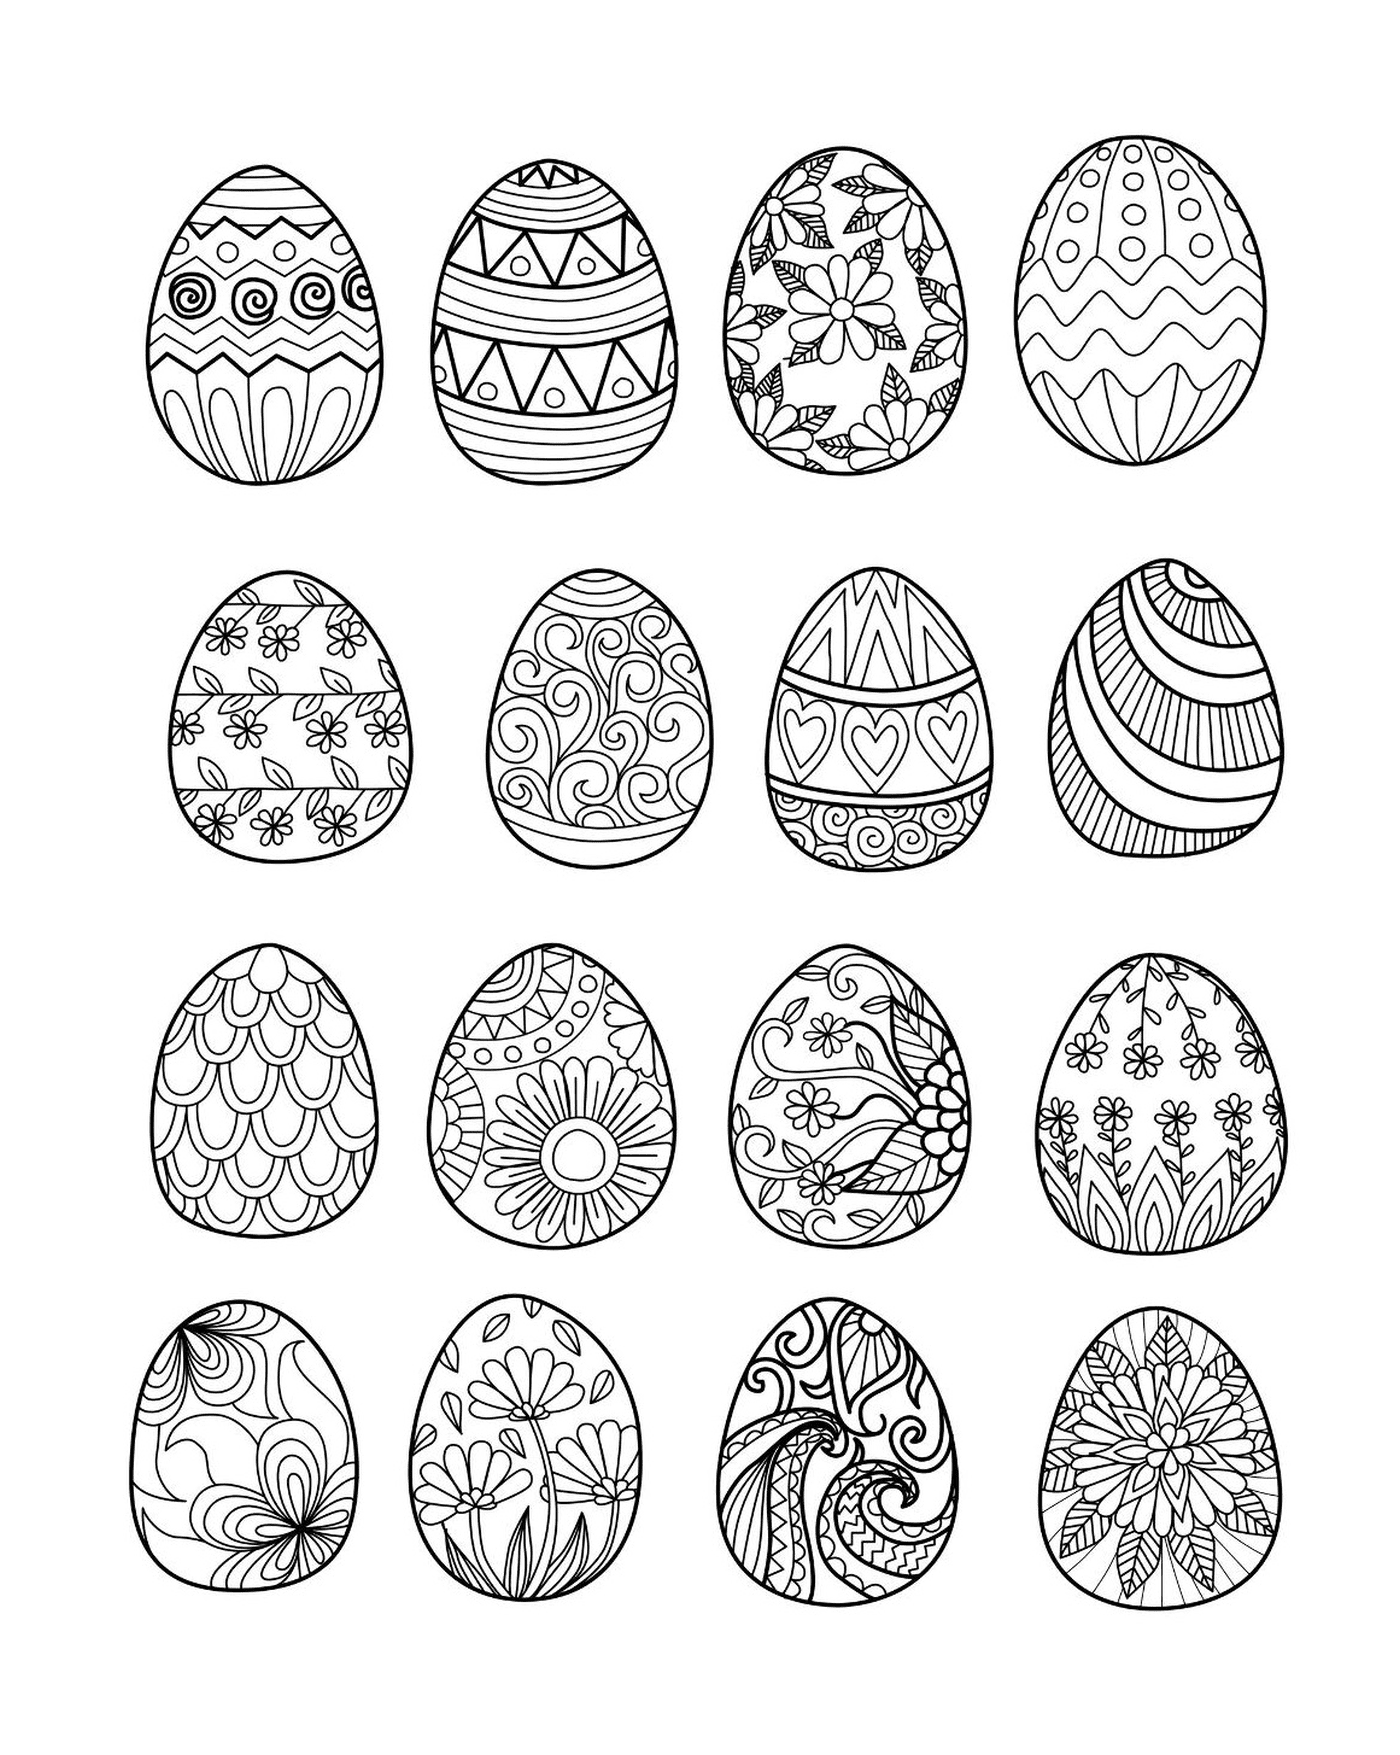  6 ovos juntos 